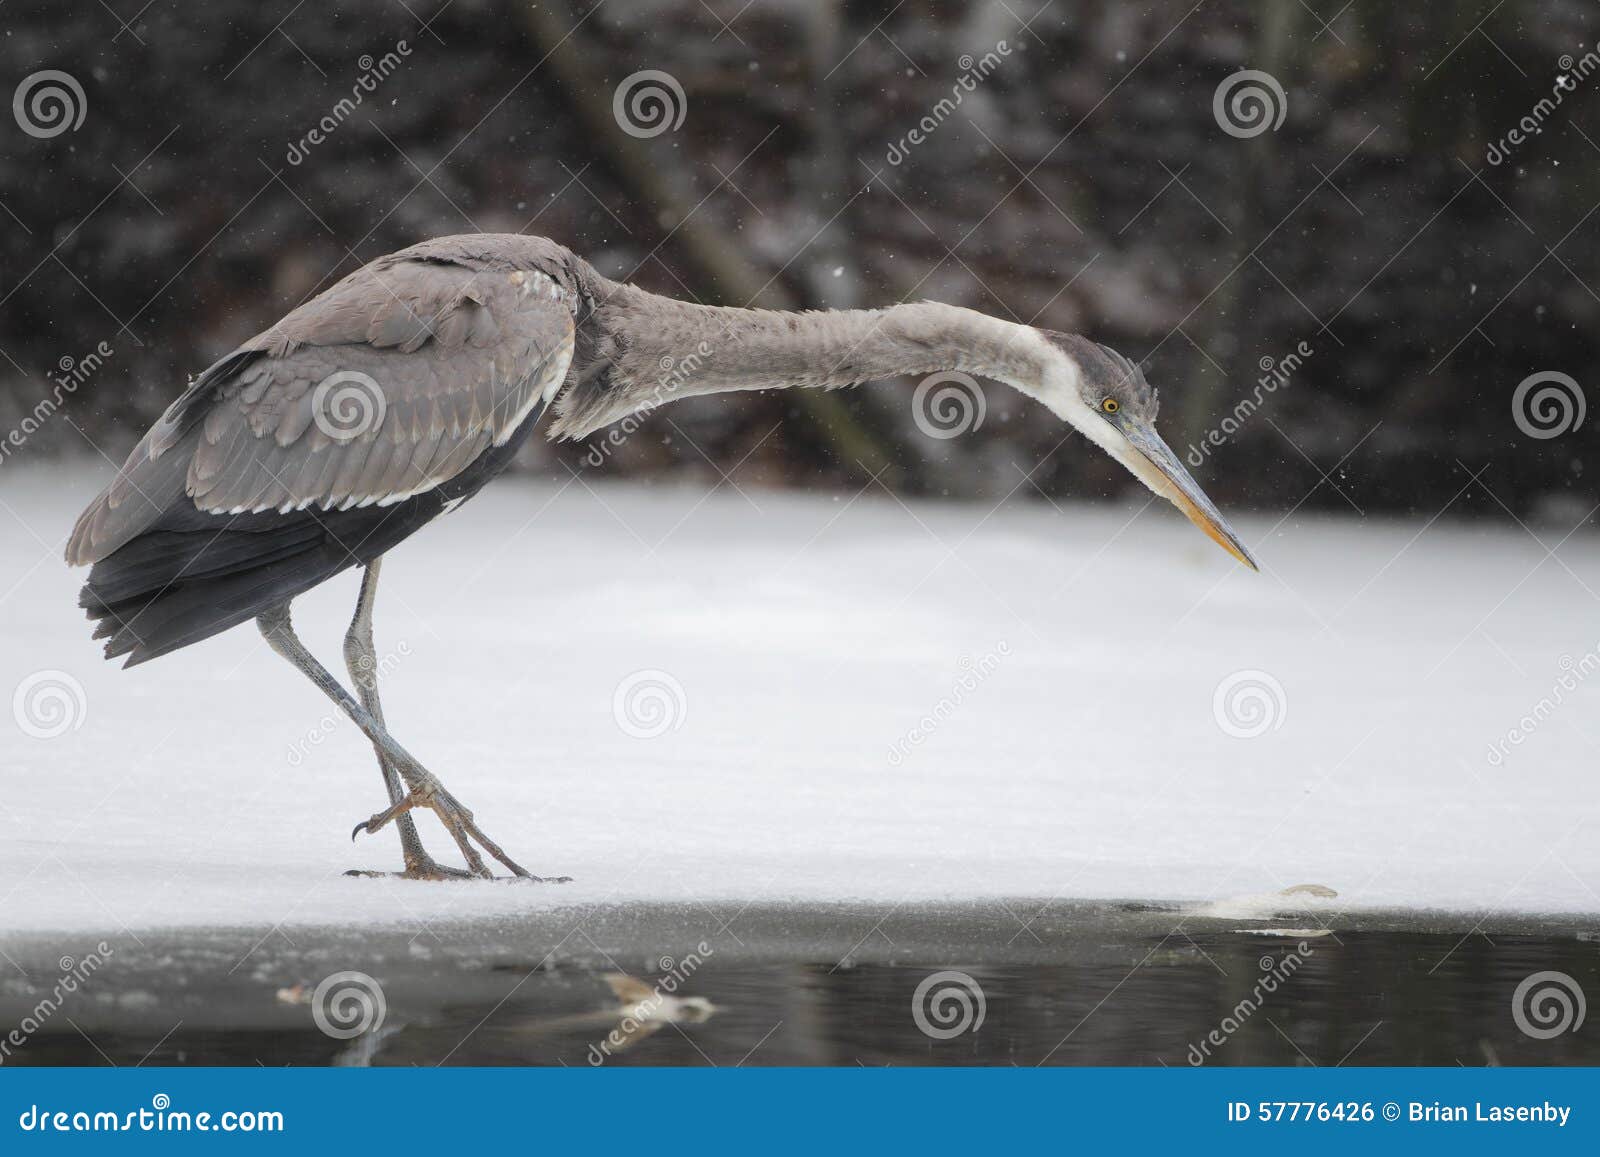 great blue heron (ardea herodias) hunting on a partially frozen